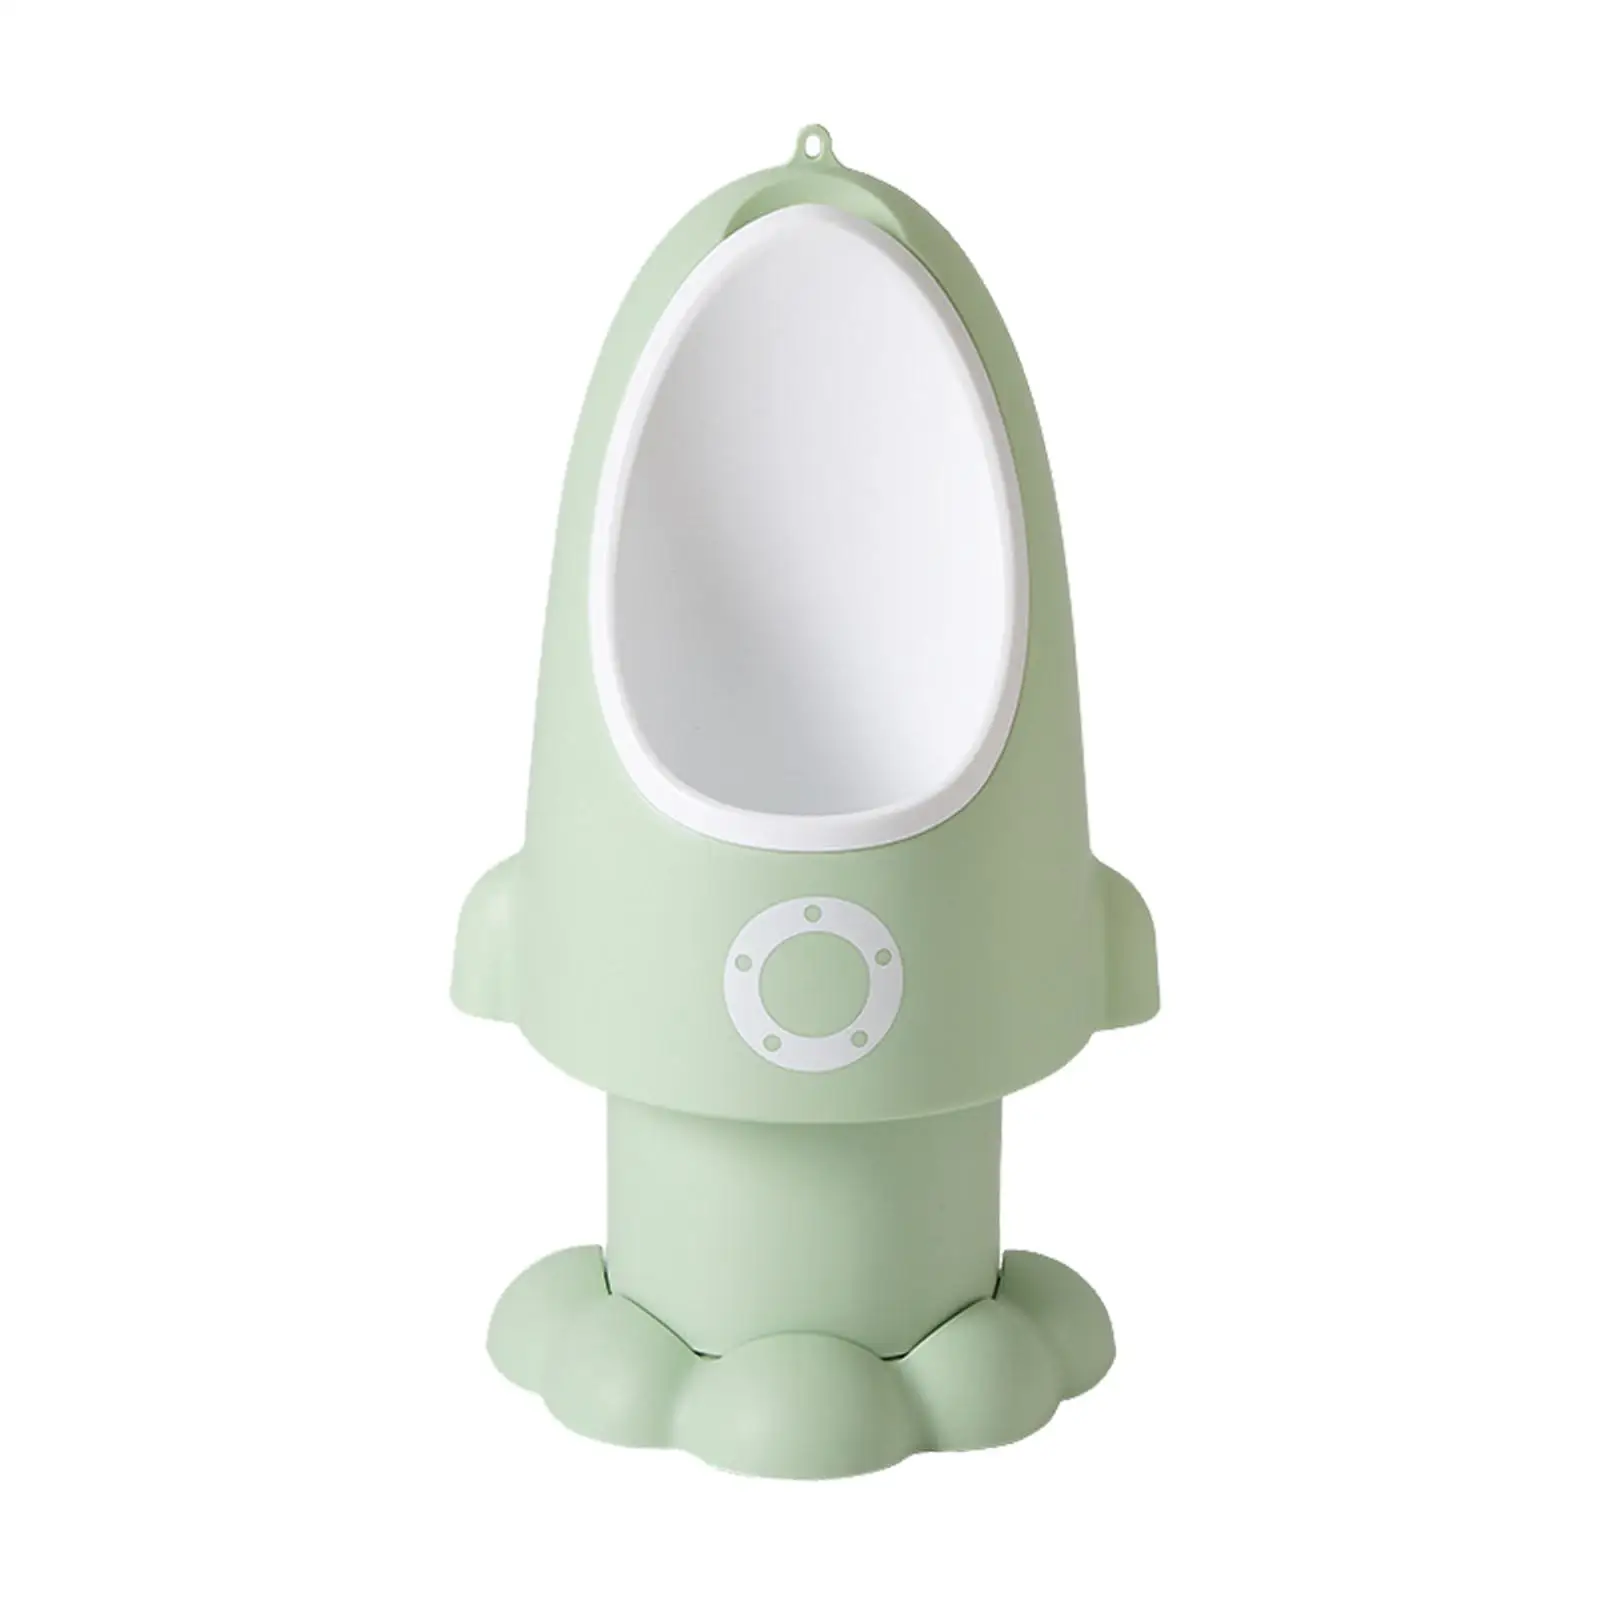 Rocket Shape Training Urinal Pee Training Adjustable Height Urinal Trainer for Baby Children